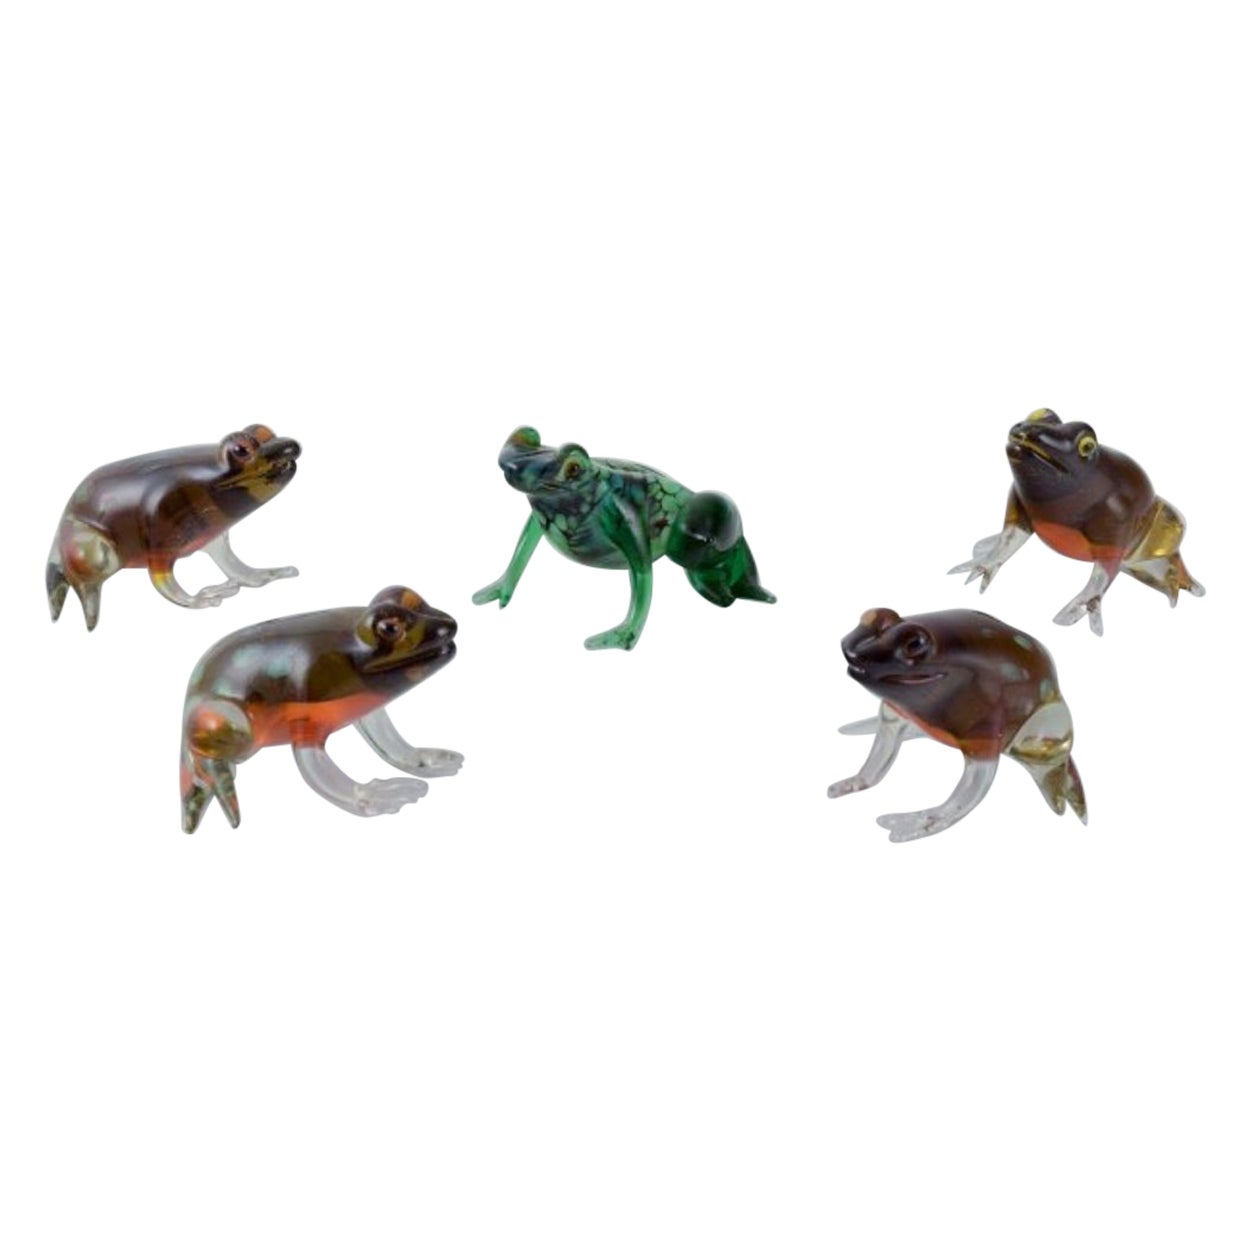 Murano, Italie. Collection de cinq figurines miniatures en verre représentant des grenouilles.